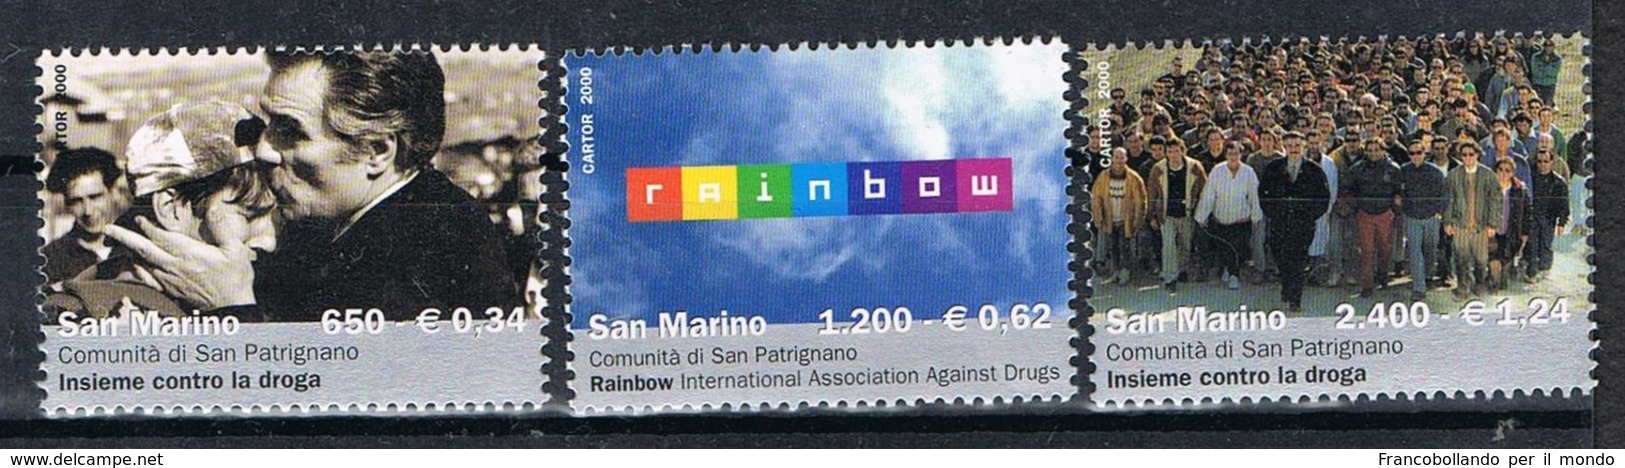 2000 SAN MARINO SET  RAINBOW INSIEME CONTRO LA DROGA   MNH ** MINT - Nuovi